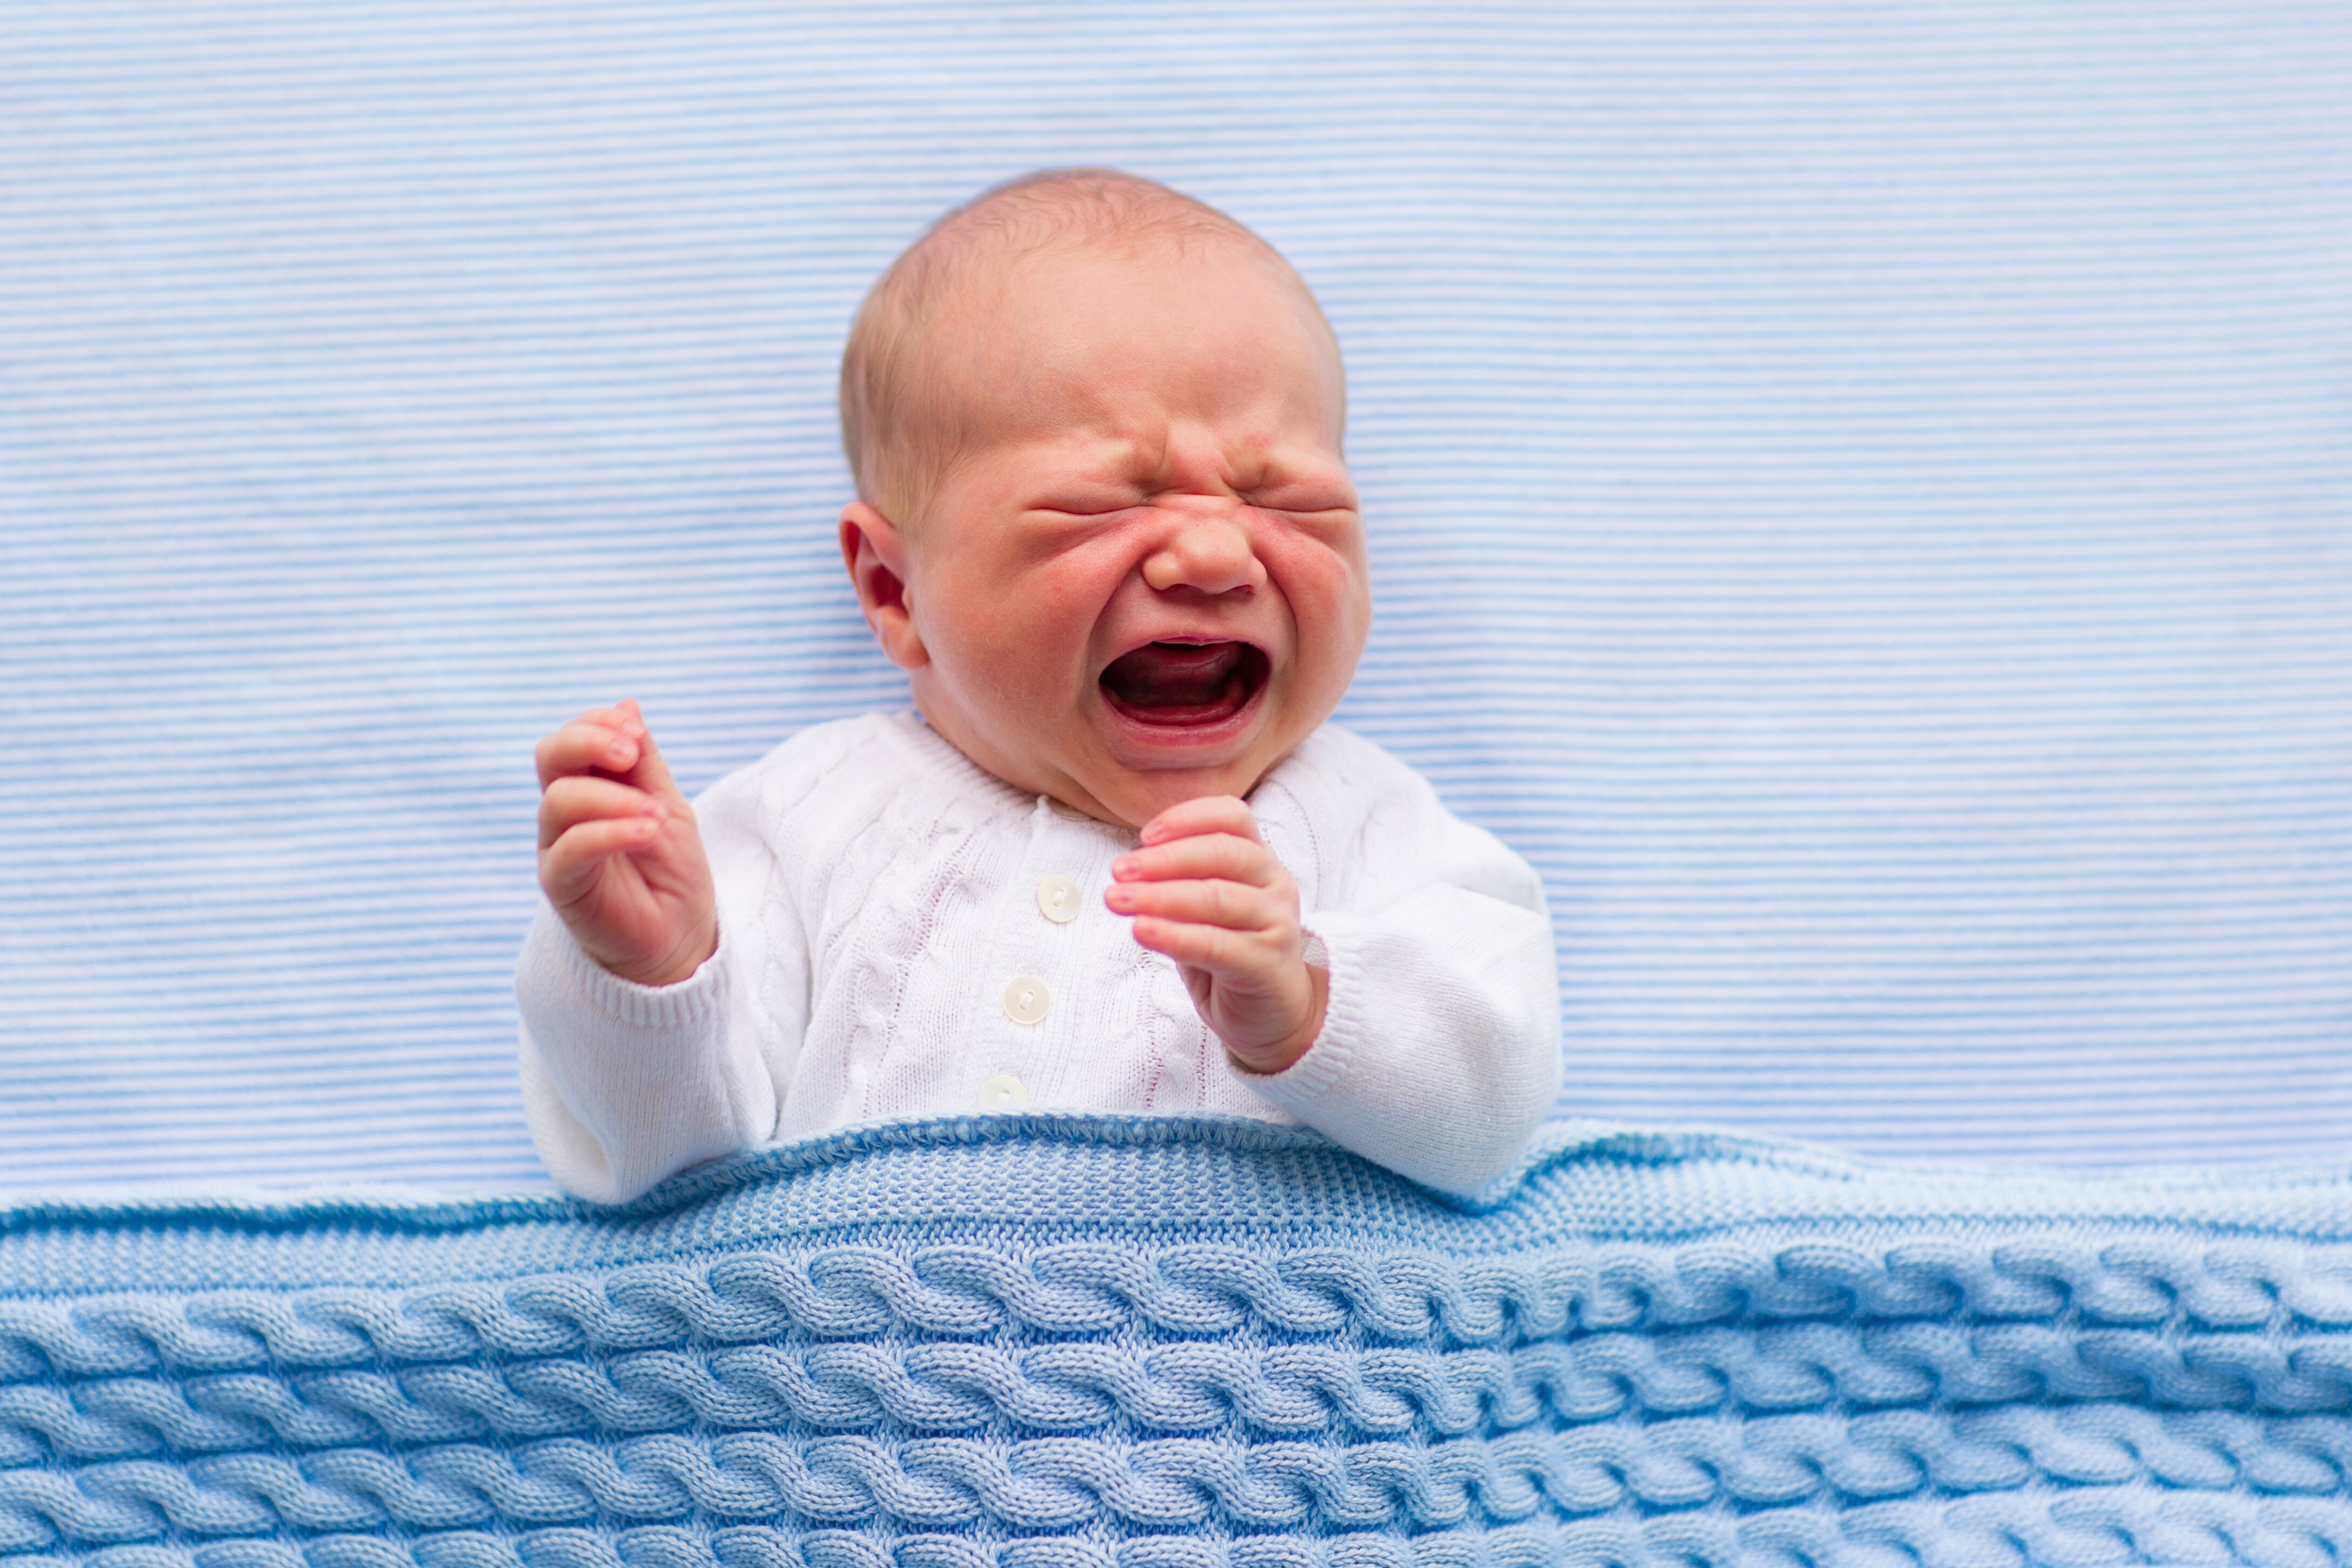 Newborn baby. | Source: Shutterstock